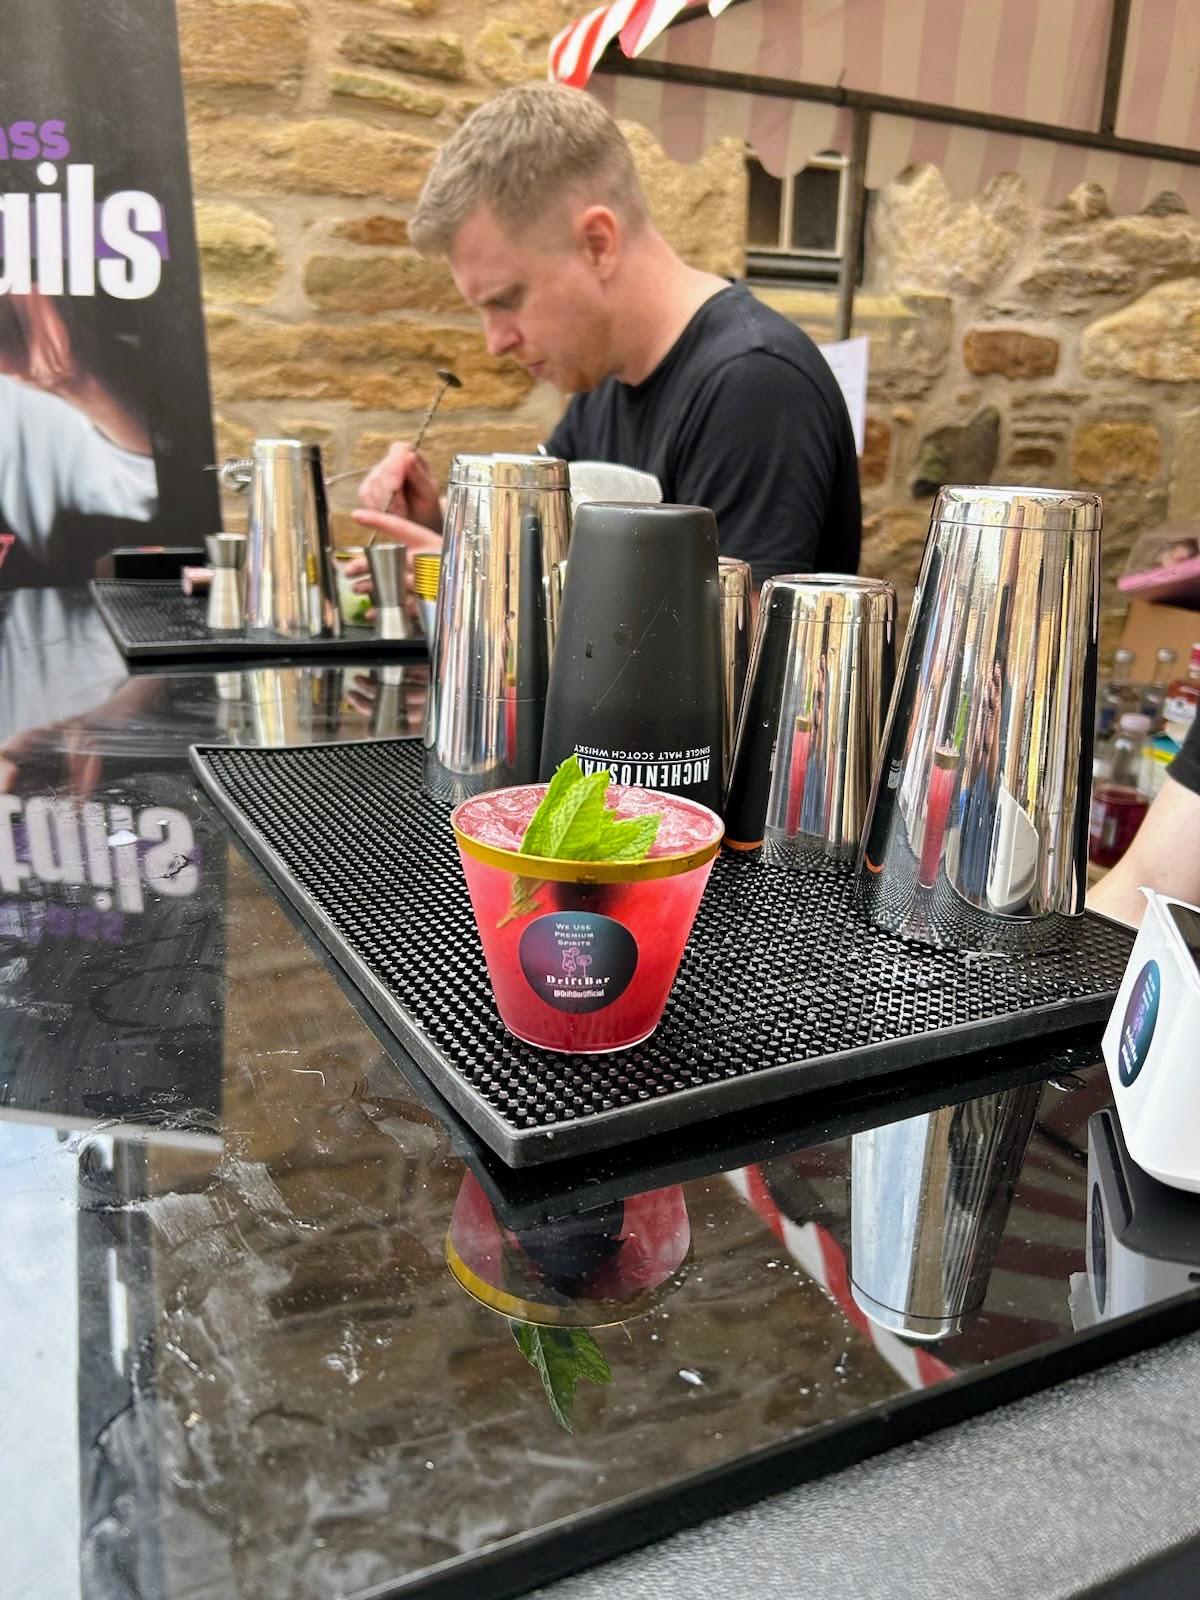 Frazer wesencraft preparing a cocktail at DriftBar